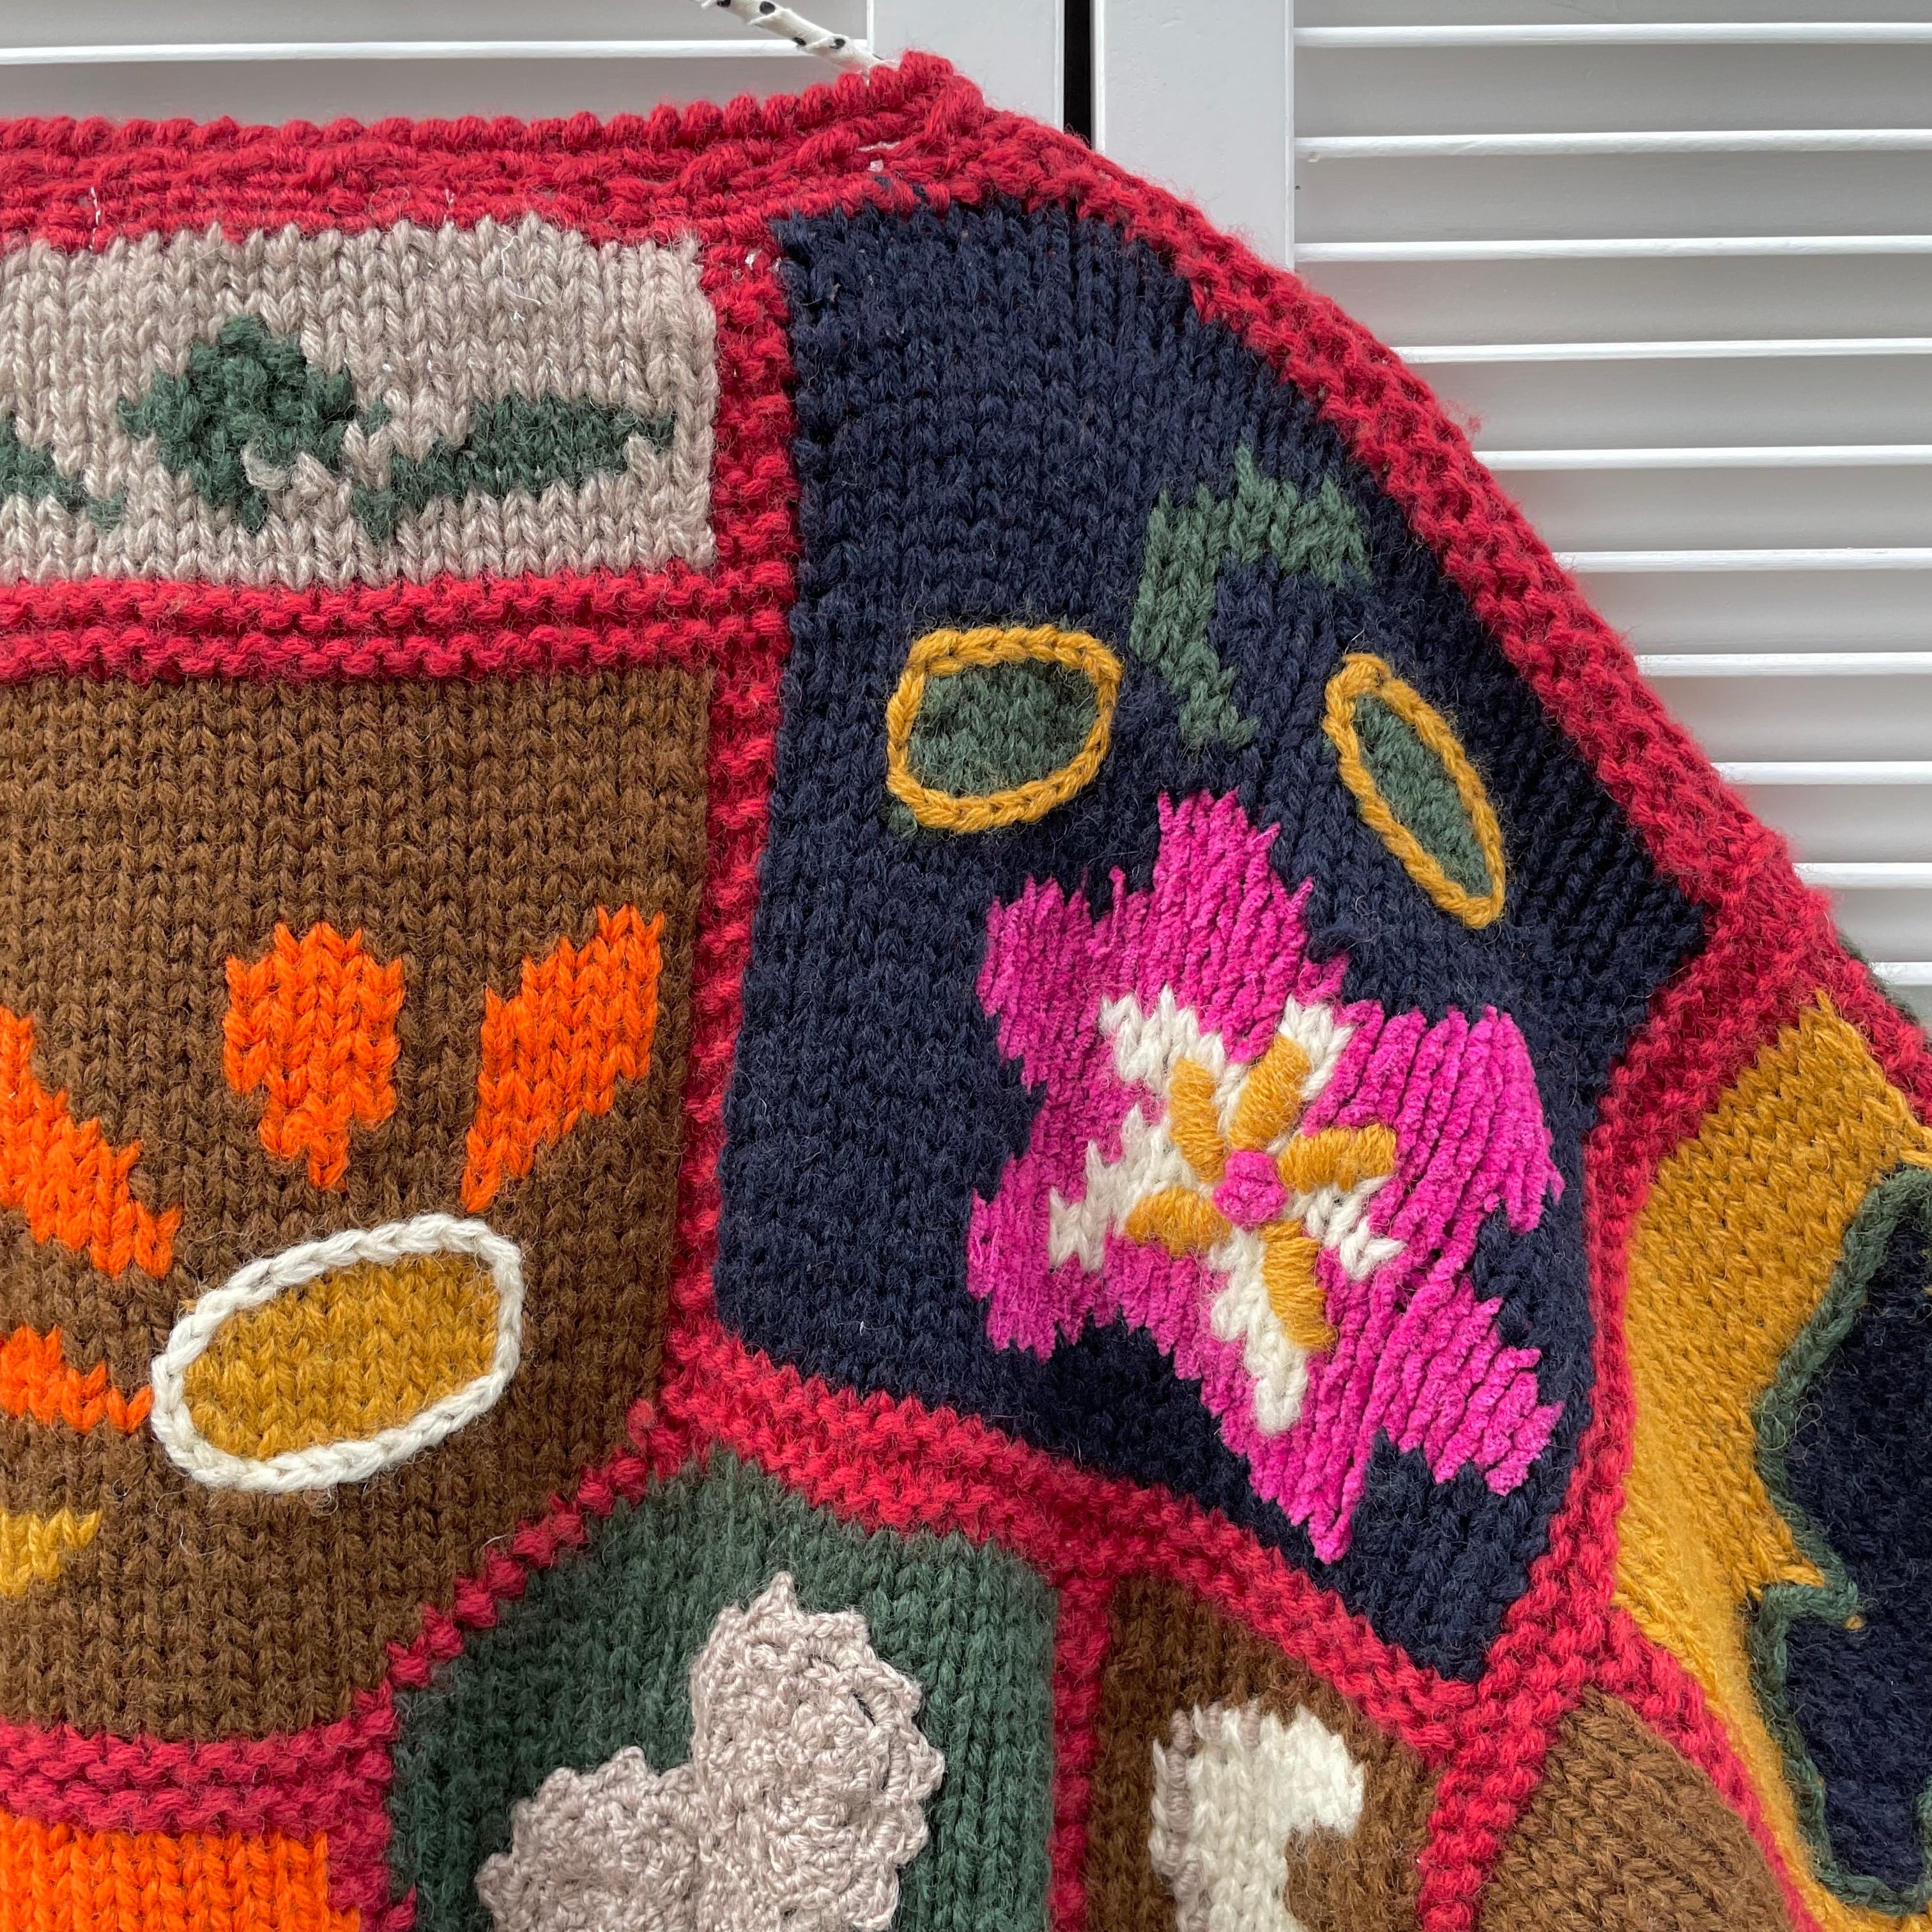 hand knit patchwork design sweater 〈レトロ古着 ハンドニット